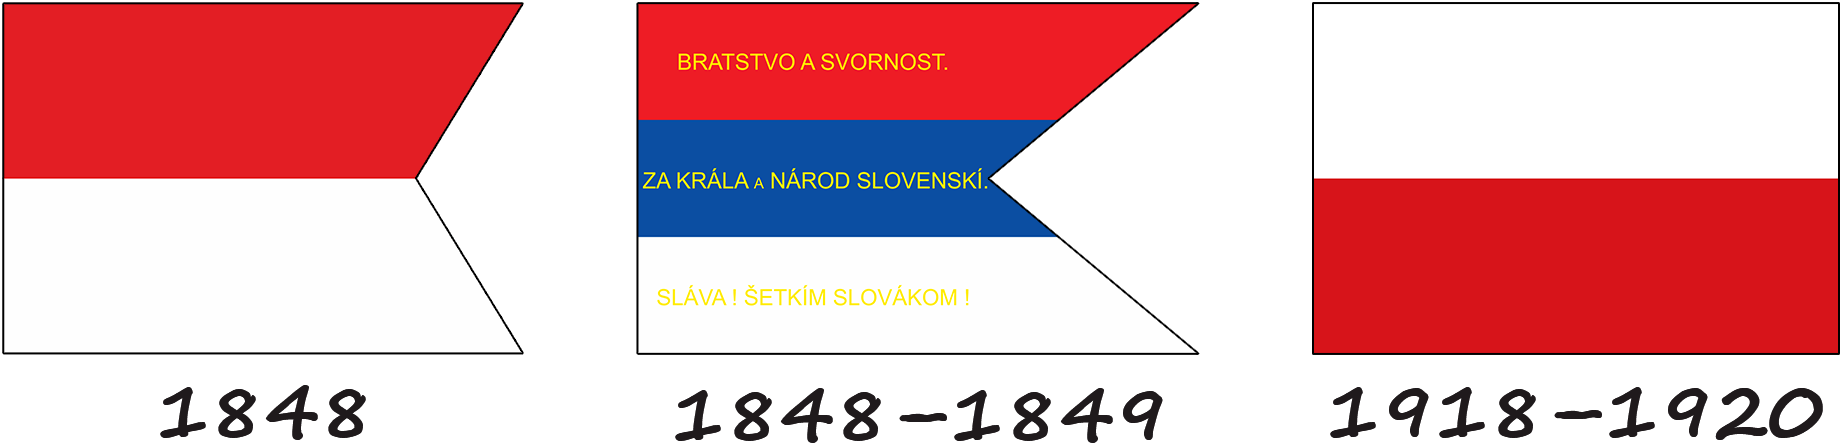 History of the Slovak flag